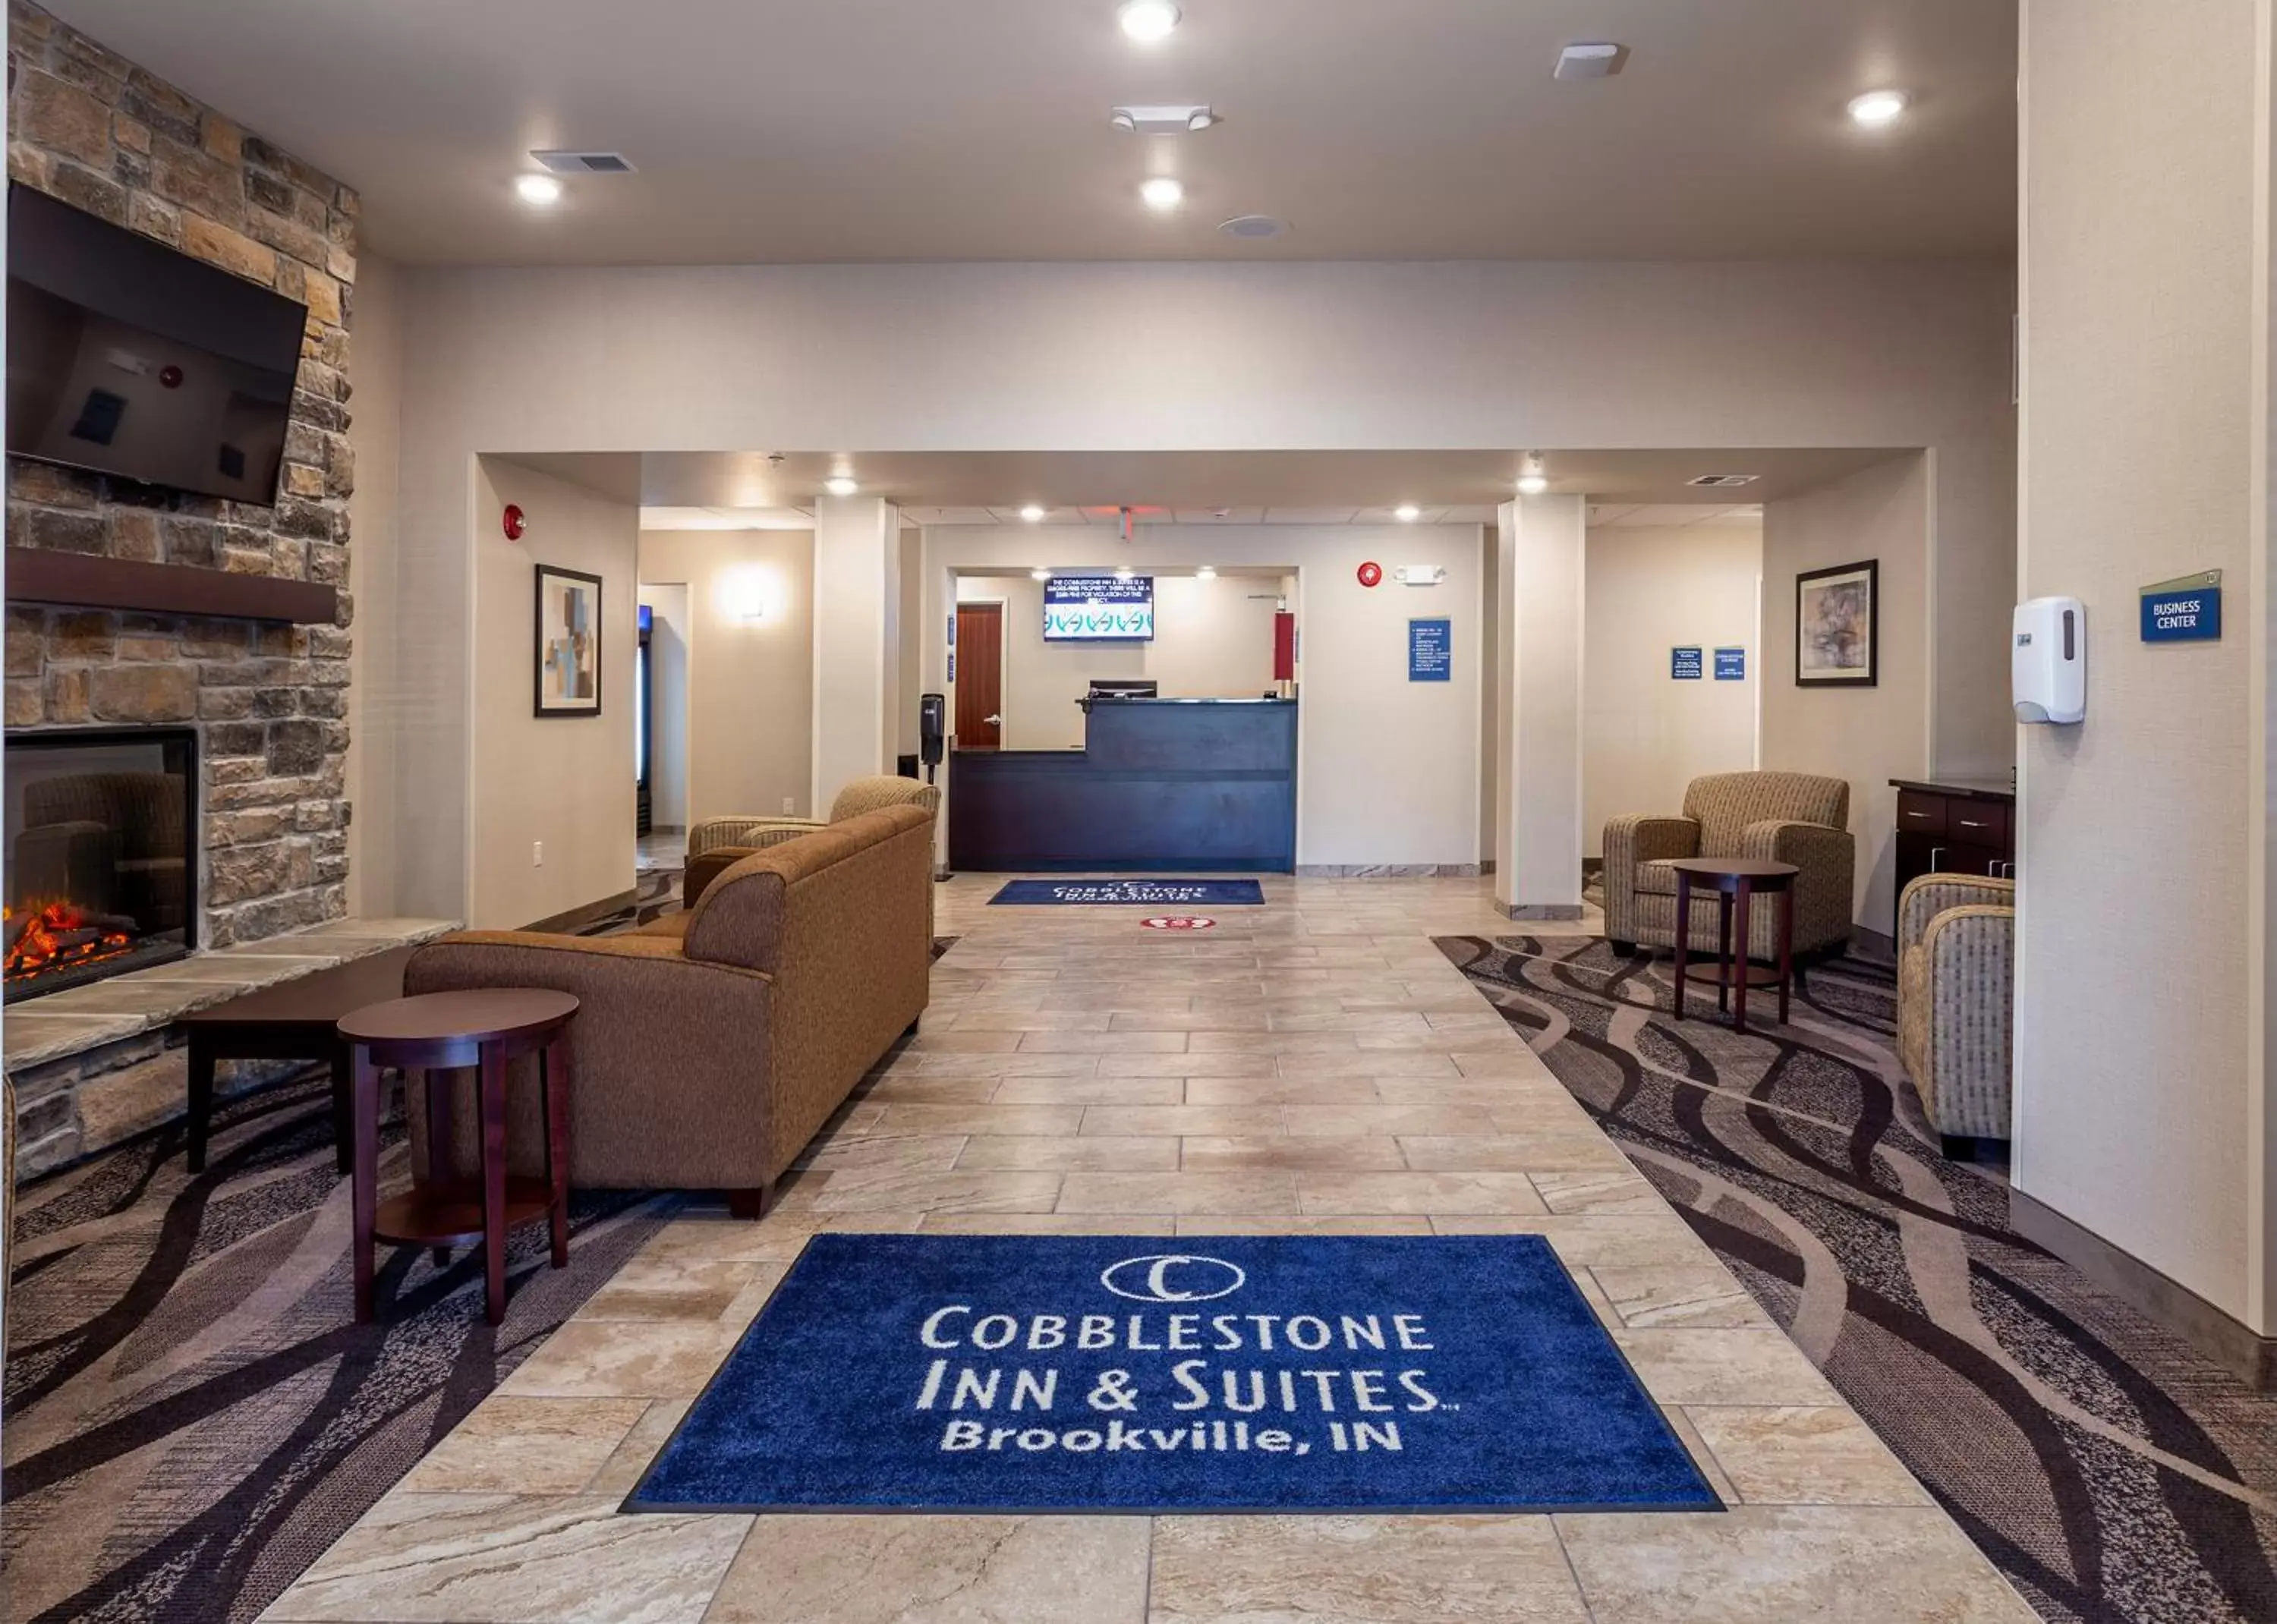 Lobby or reception in Cobblestone Inn & Suites - Brookville